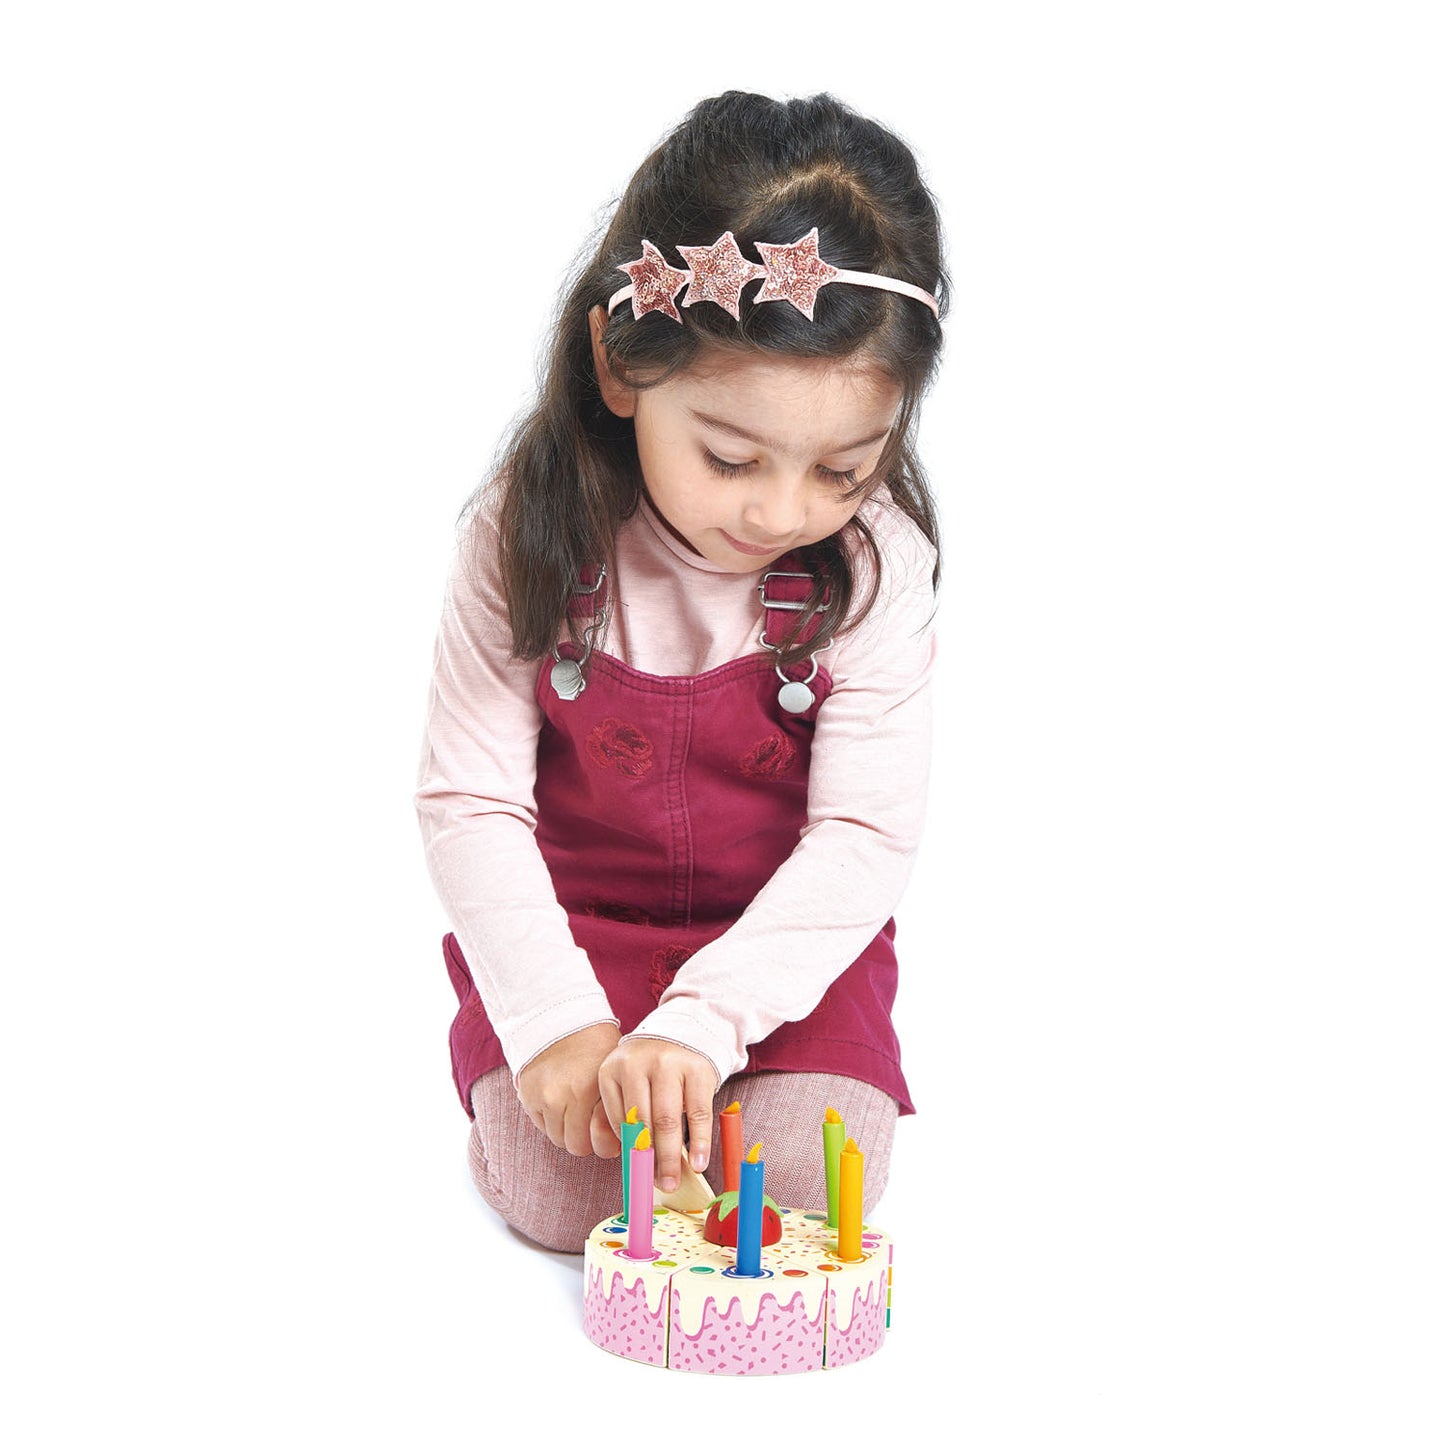 Girl slicing wooden birthday cake set